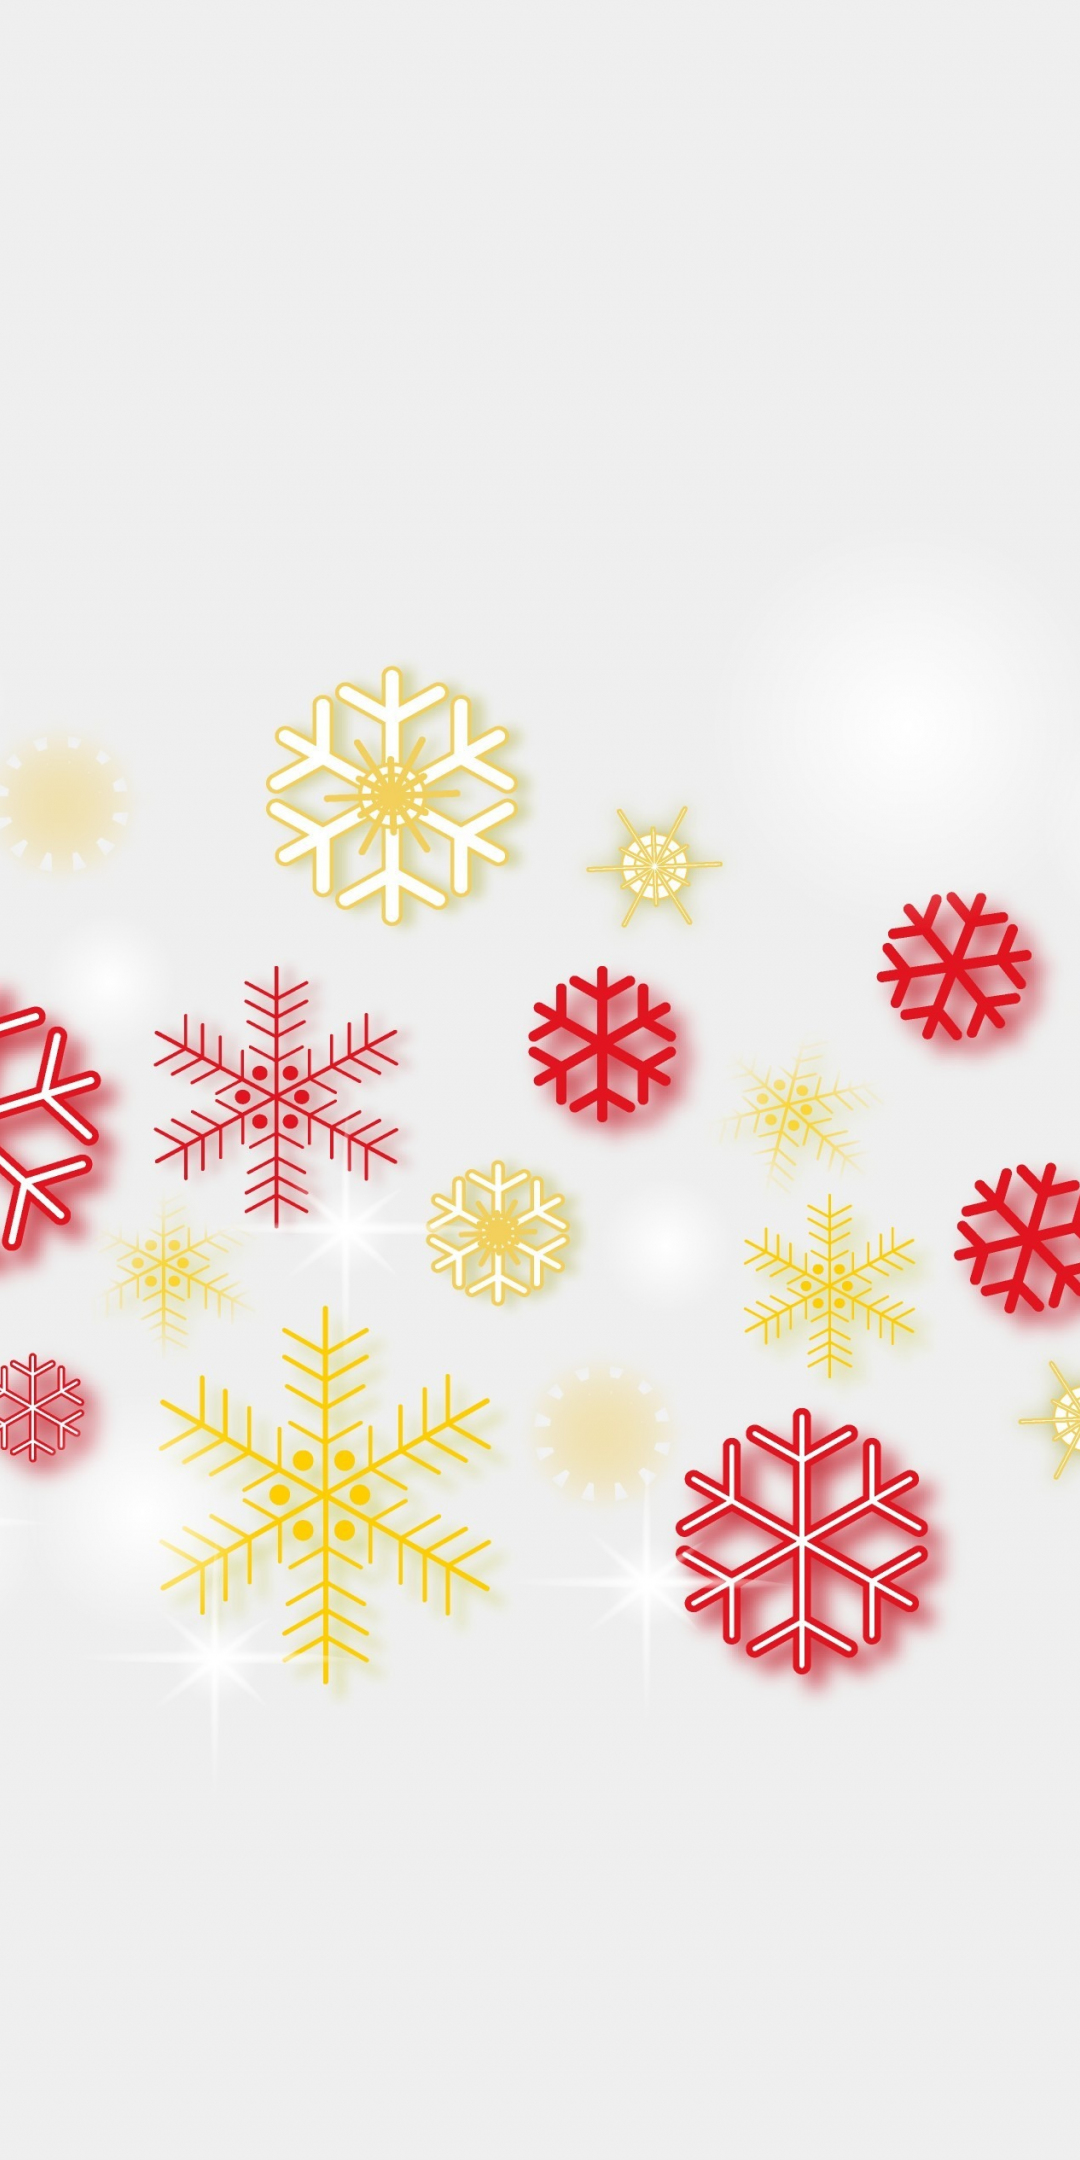 Abstract, Christmas, snowflakes, 1080x2160 wallpaper